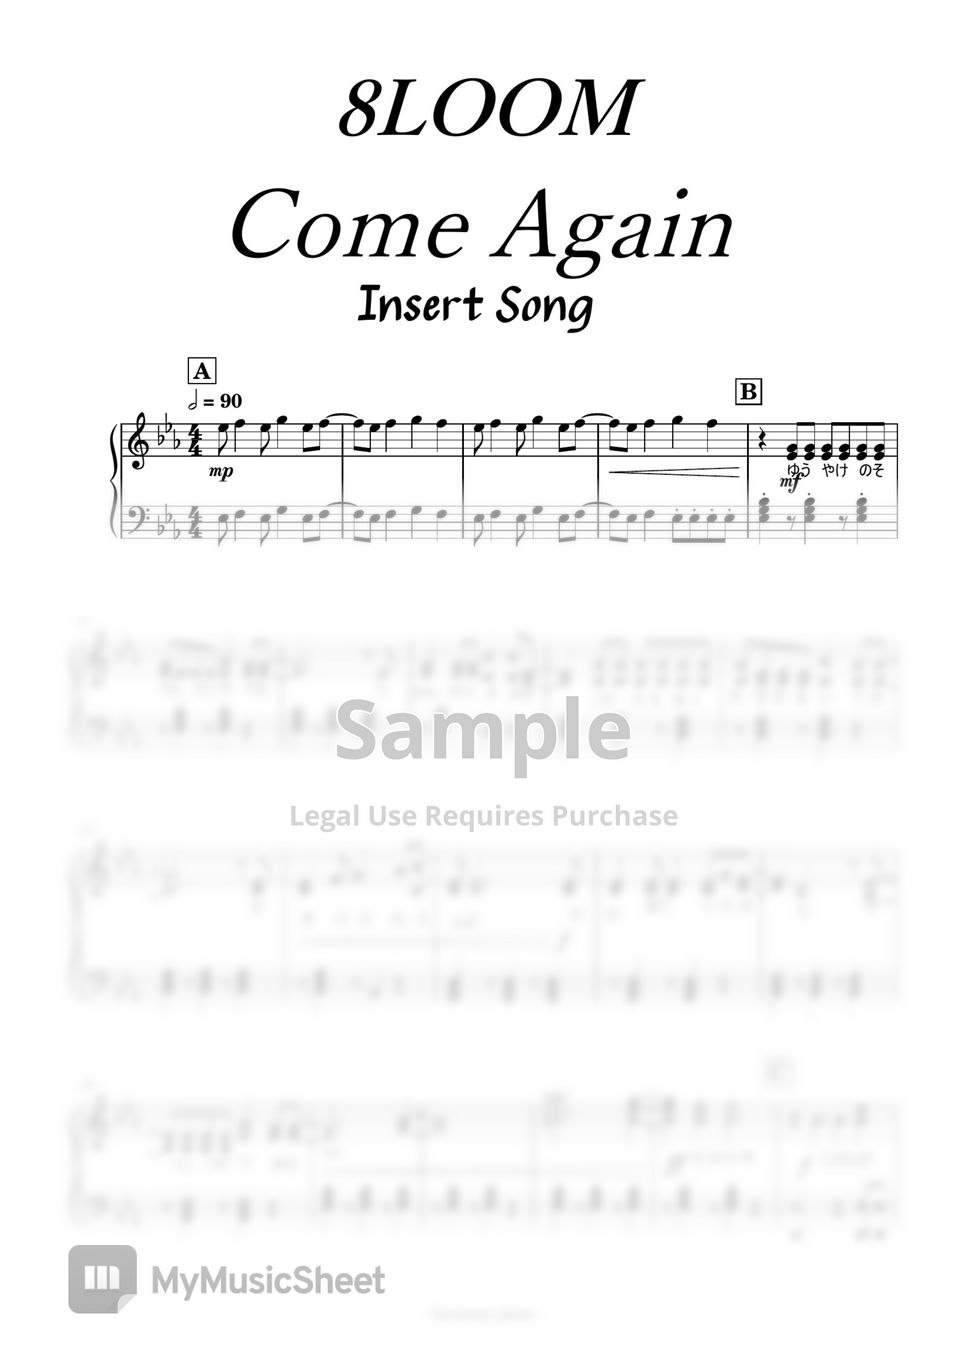 8LOOM - Come Again by harmony piano